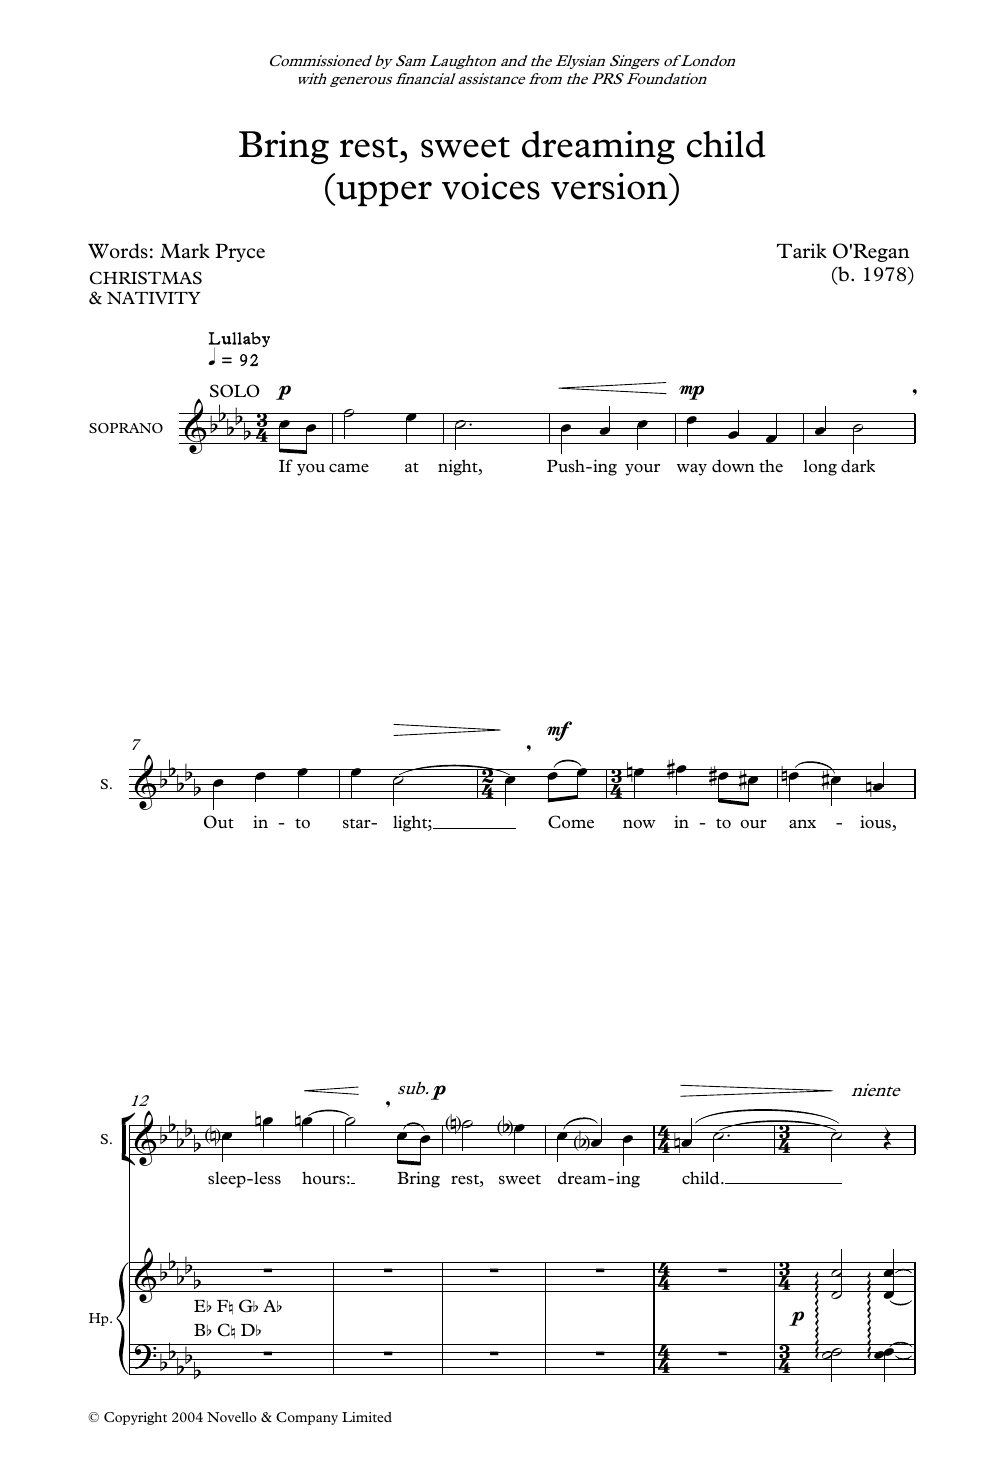 Tarik O'Regan Bring Rest Sweet Dreaming Child Sheet Music Notes & Chords for SATB Choir - Download or Print PDF